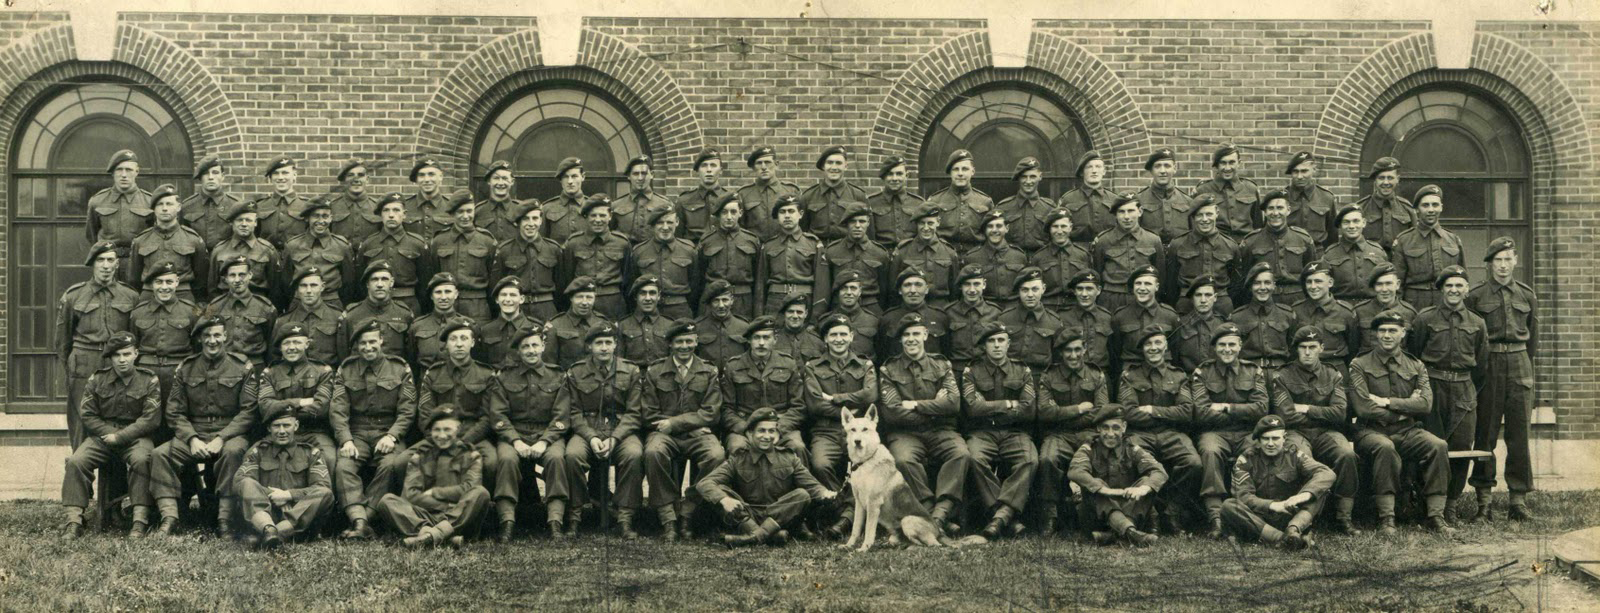 Private Emile Corteil with Glen - company photograph 1944